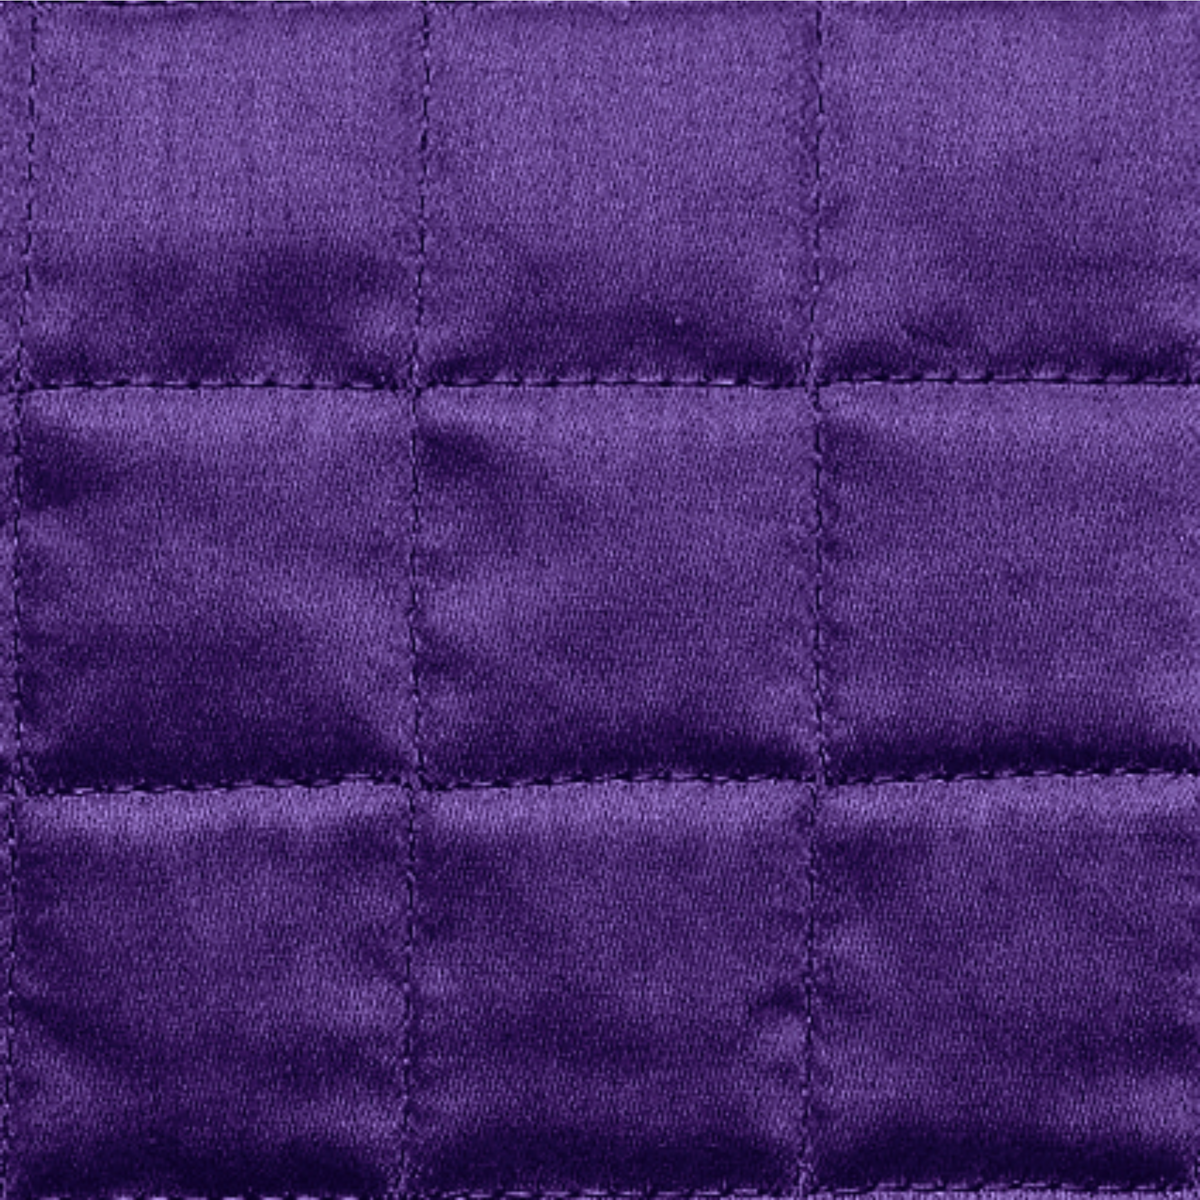 Fabric Closeup of Signoria Masaccio Bedding in Violet  Color